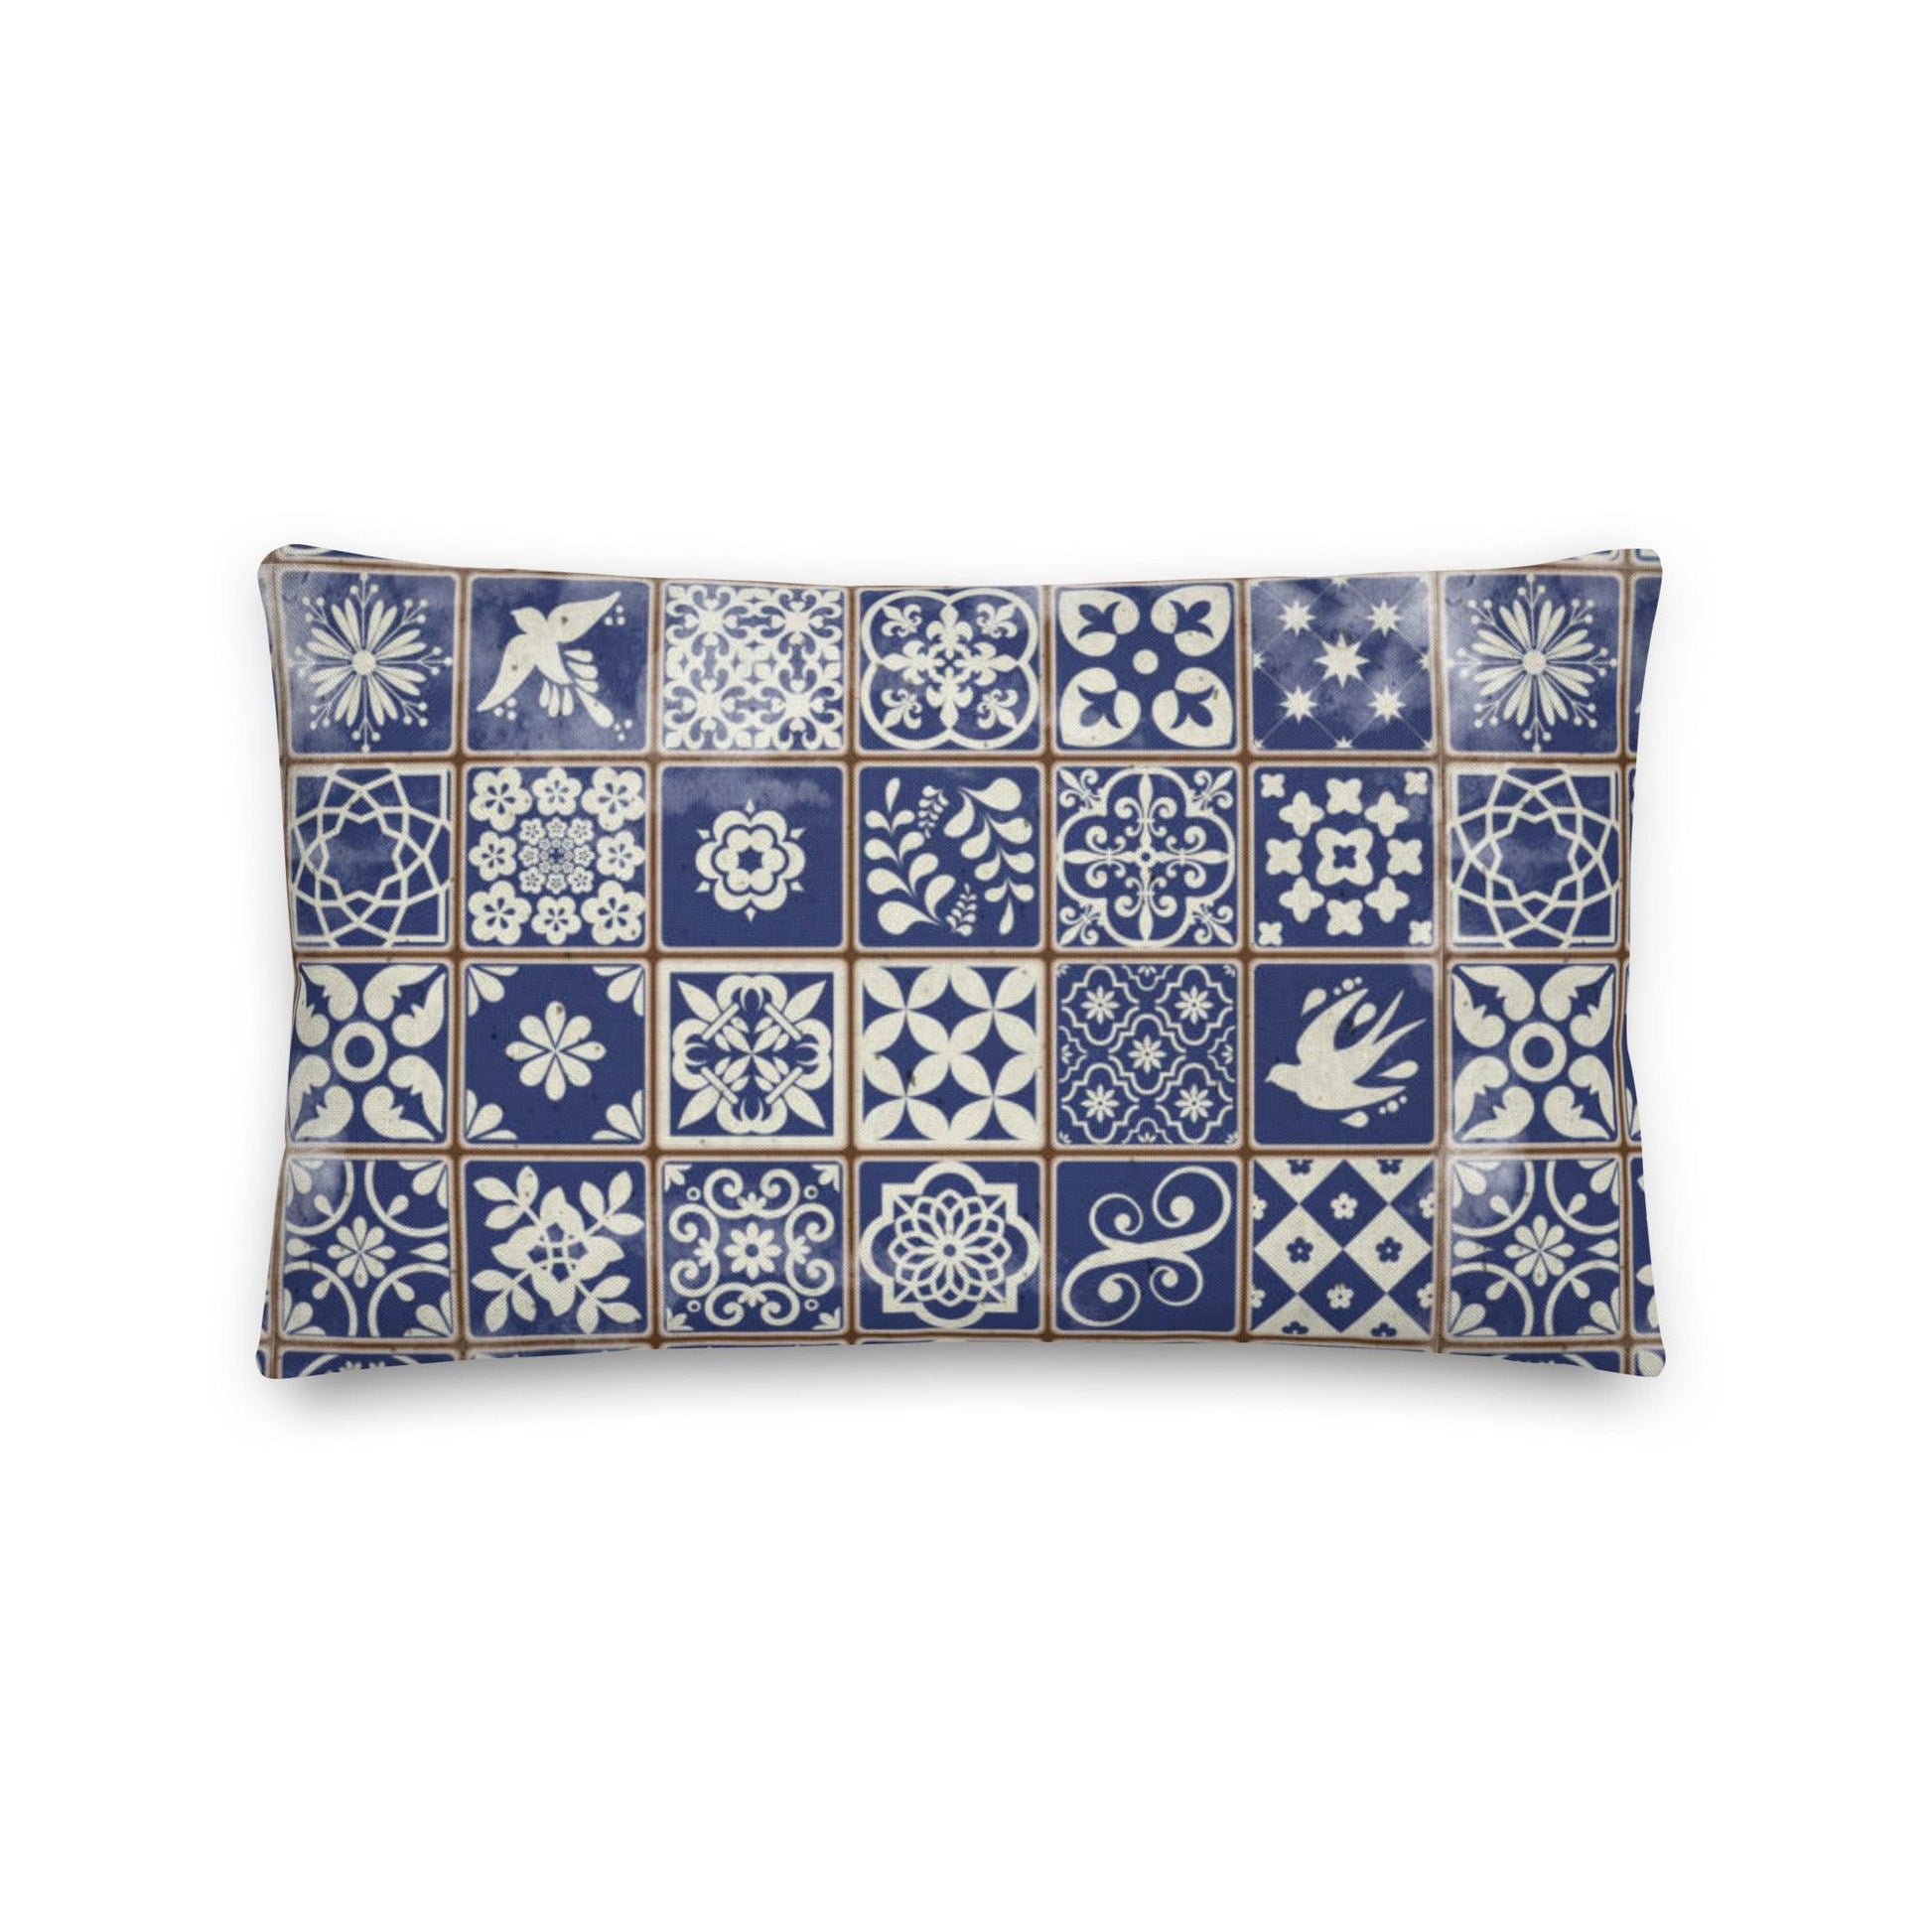 Portuguese Azulejo Tile Throw Pillow - The Global Wanderer